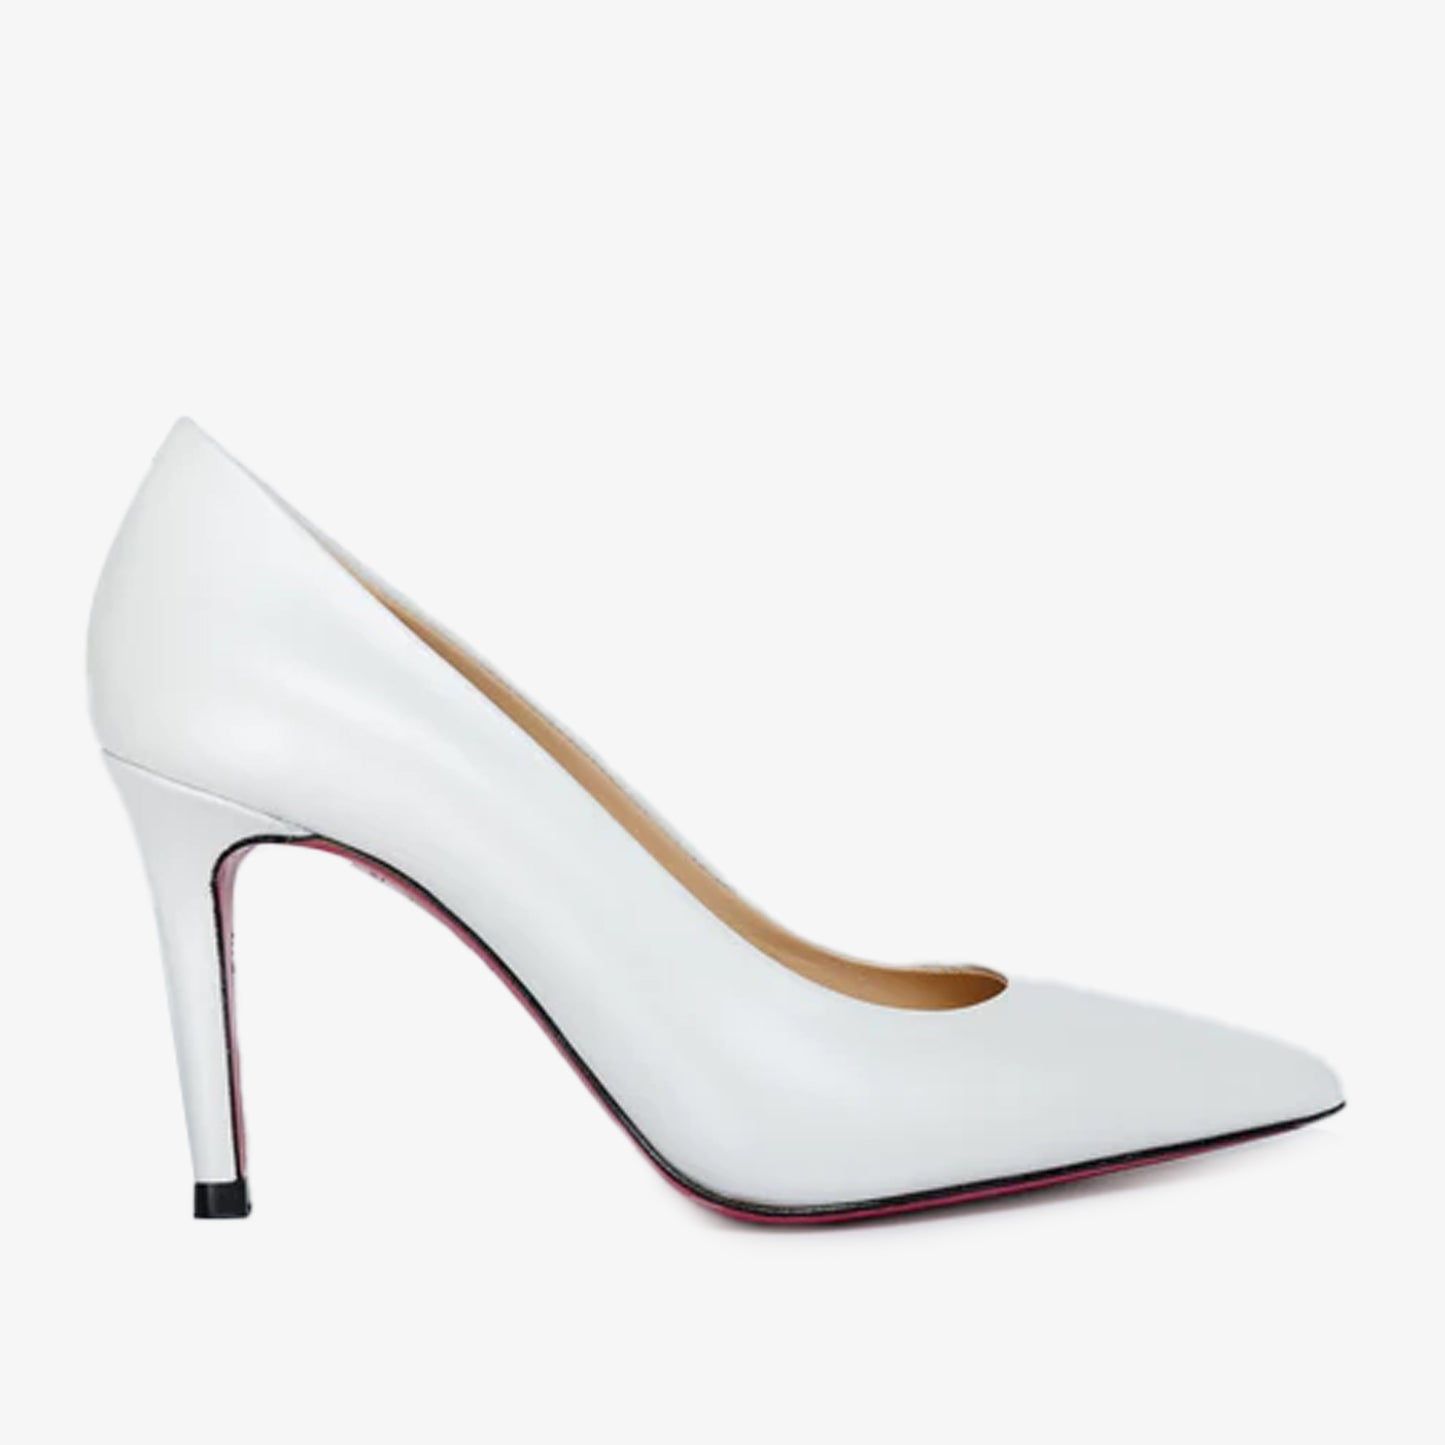 The Ege White Leather Pump Fuchsia Sole Women Shoe